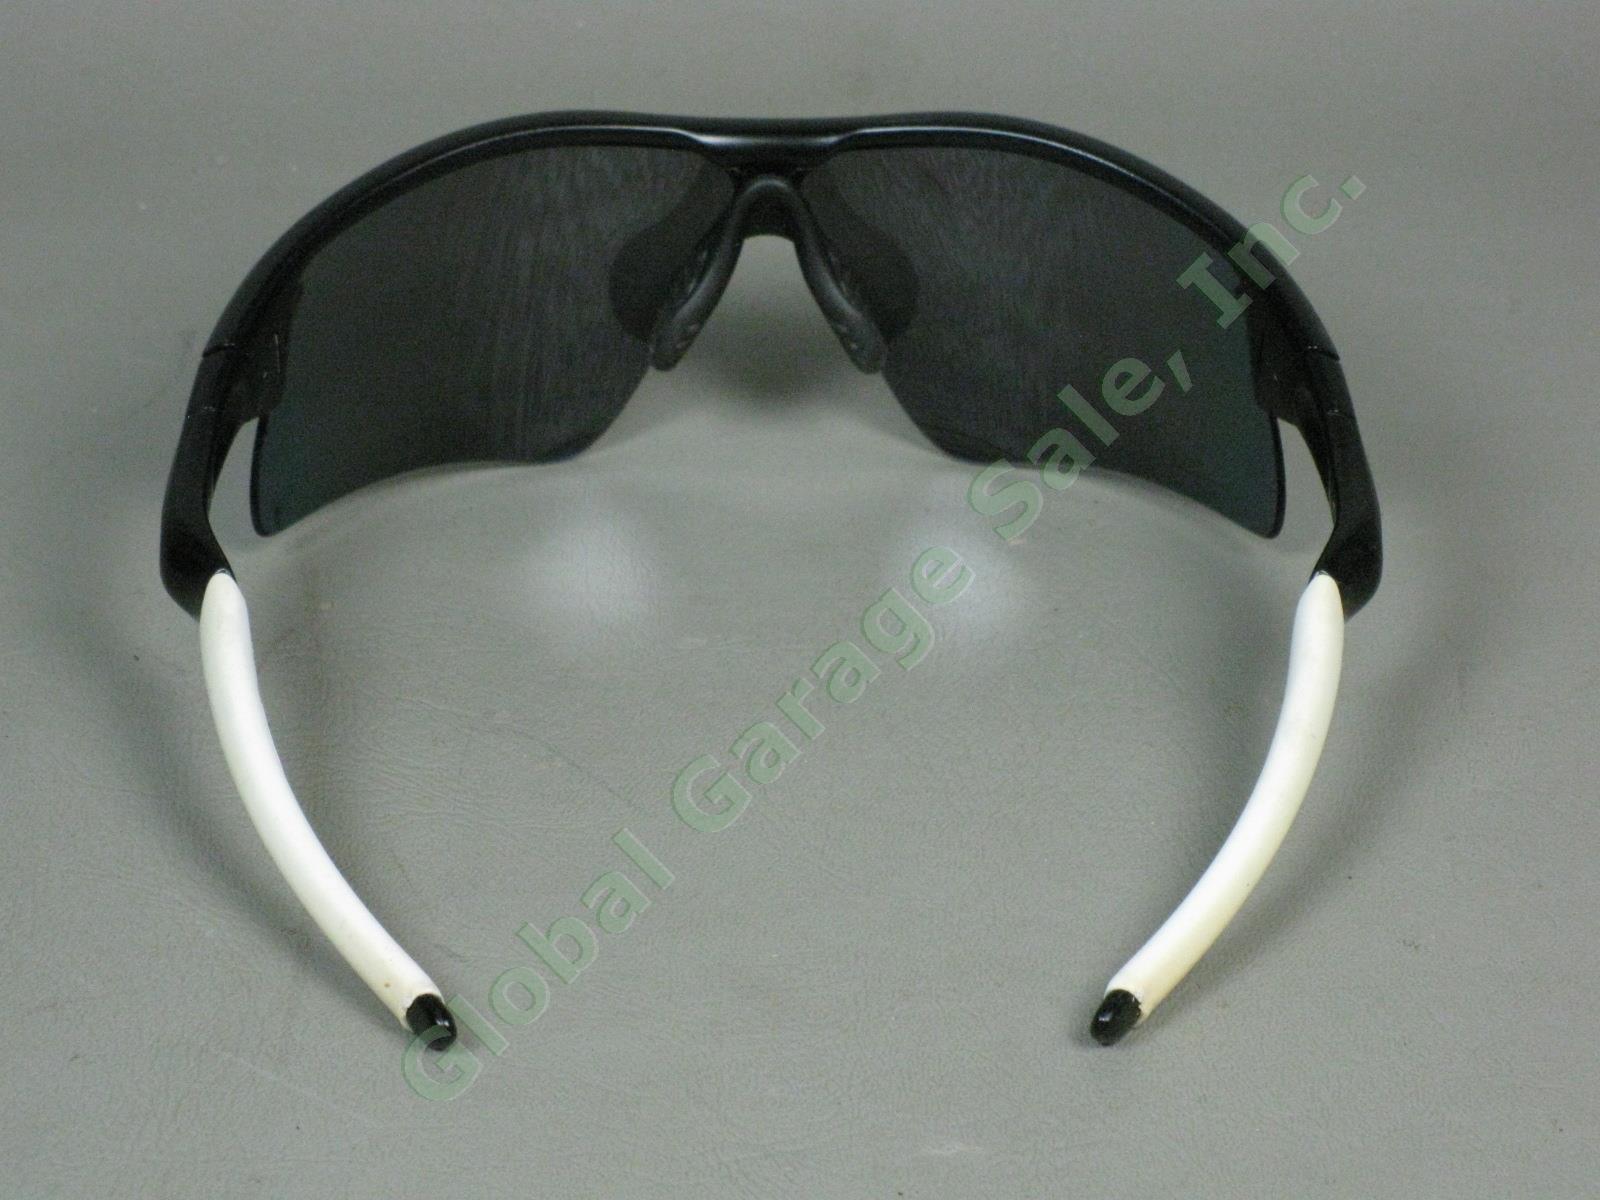 Oakley Radar Path Sunglasses Hard Case Pouch 1 Owner Prism Road? Lenses No Res! 4